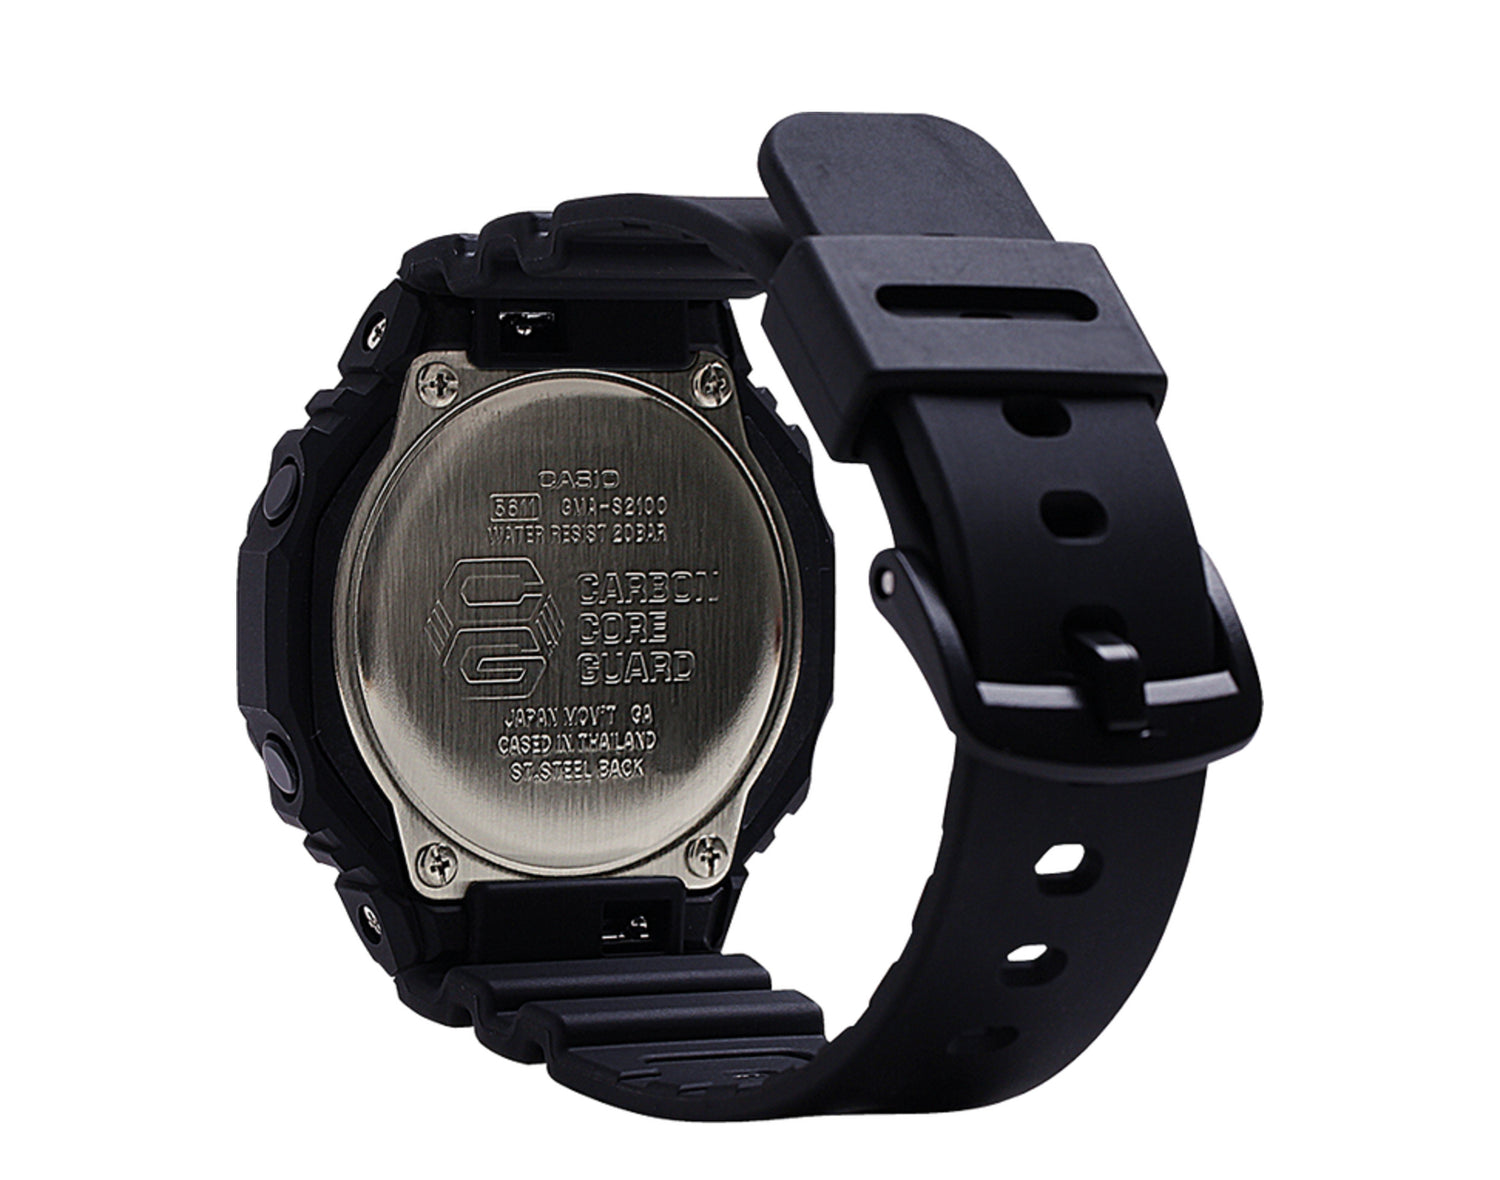 Casio G-Shock GMAS2100 Analog-Digital Resin Women's Watch